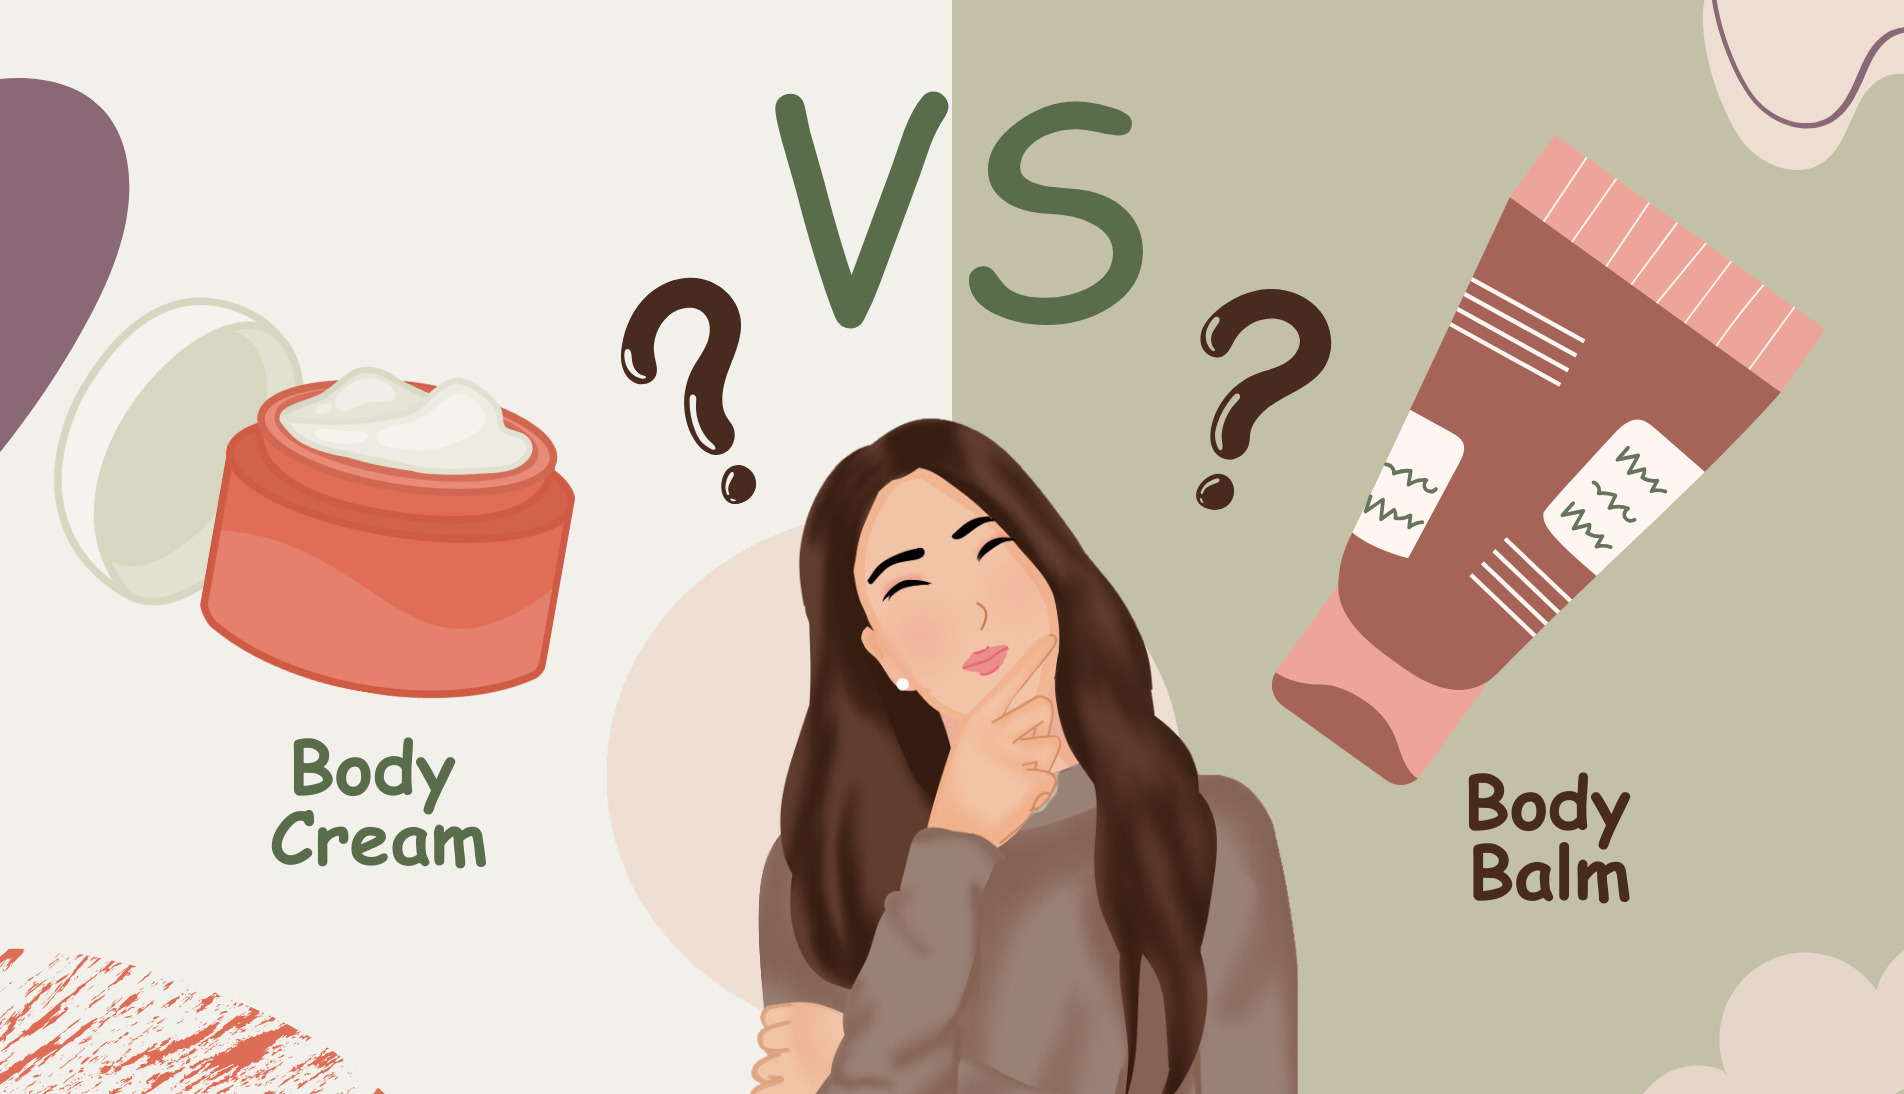 Illustration comparing a body balm and a body cream.